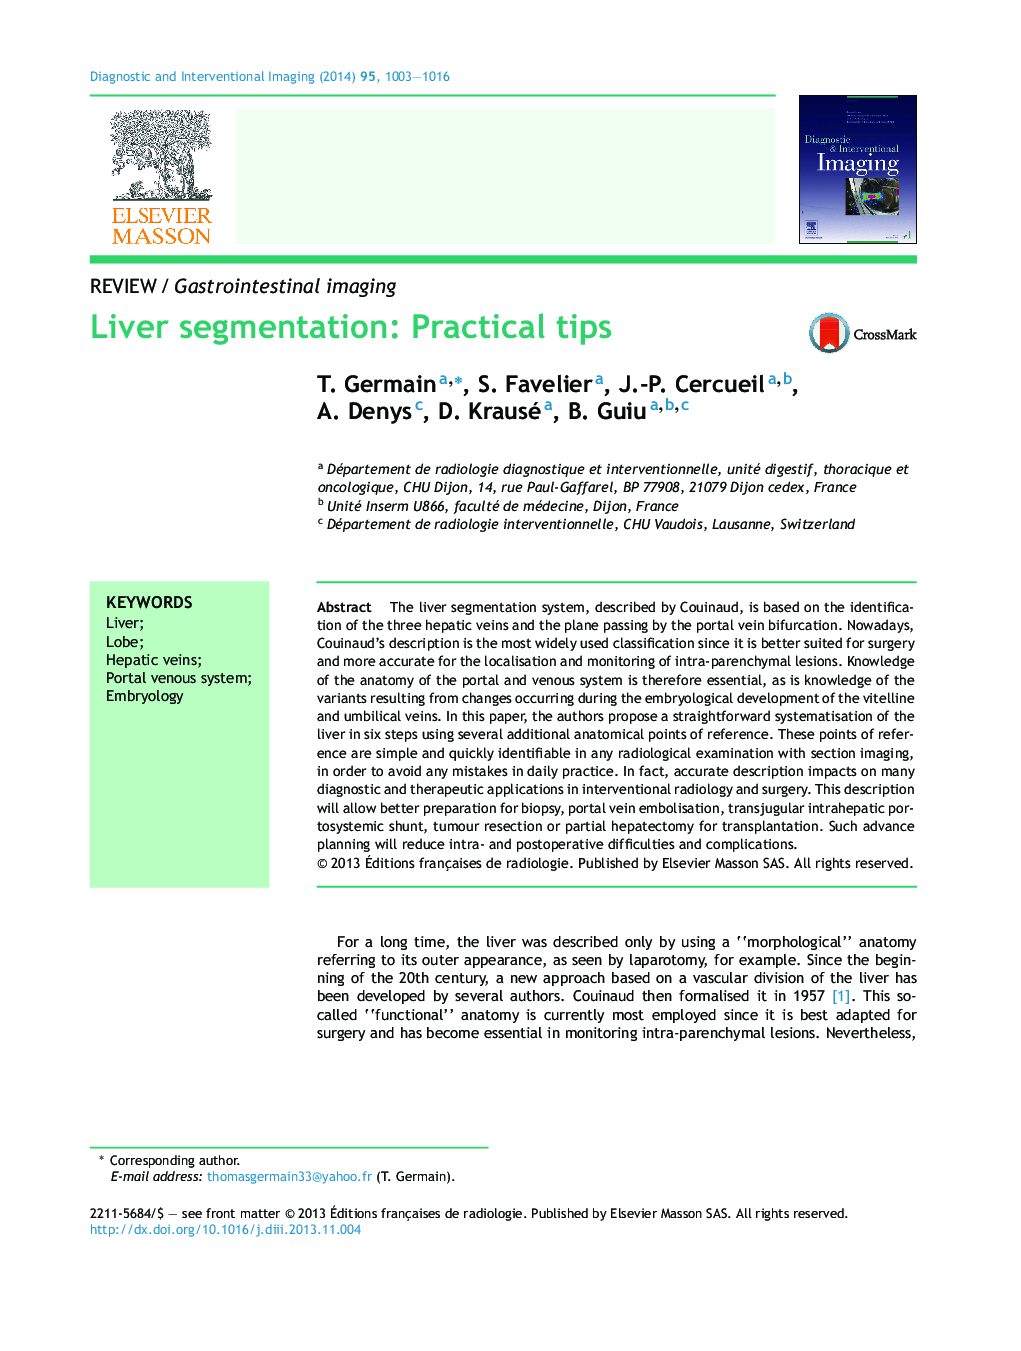 Liver segmentation: Practical tips